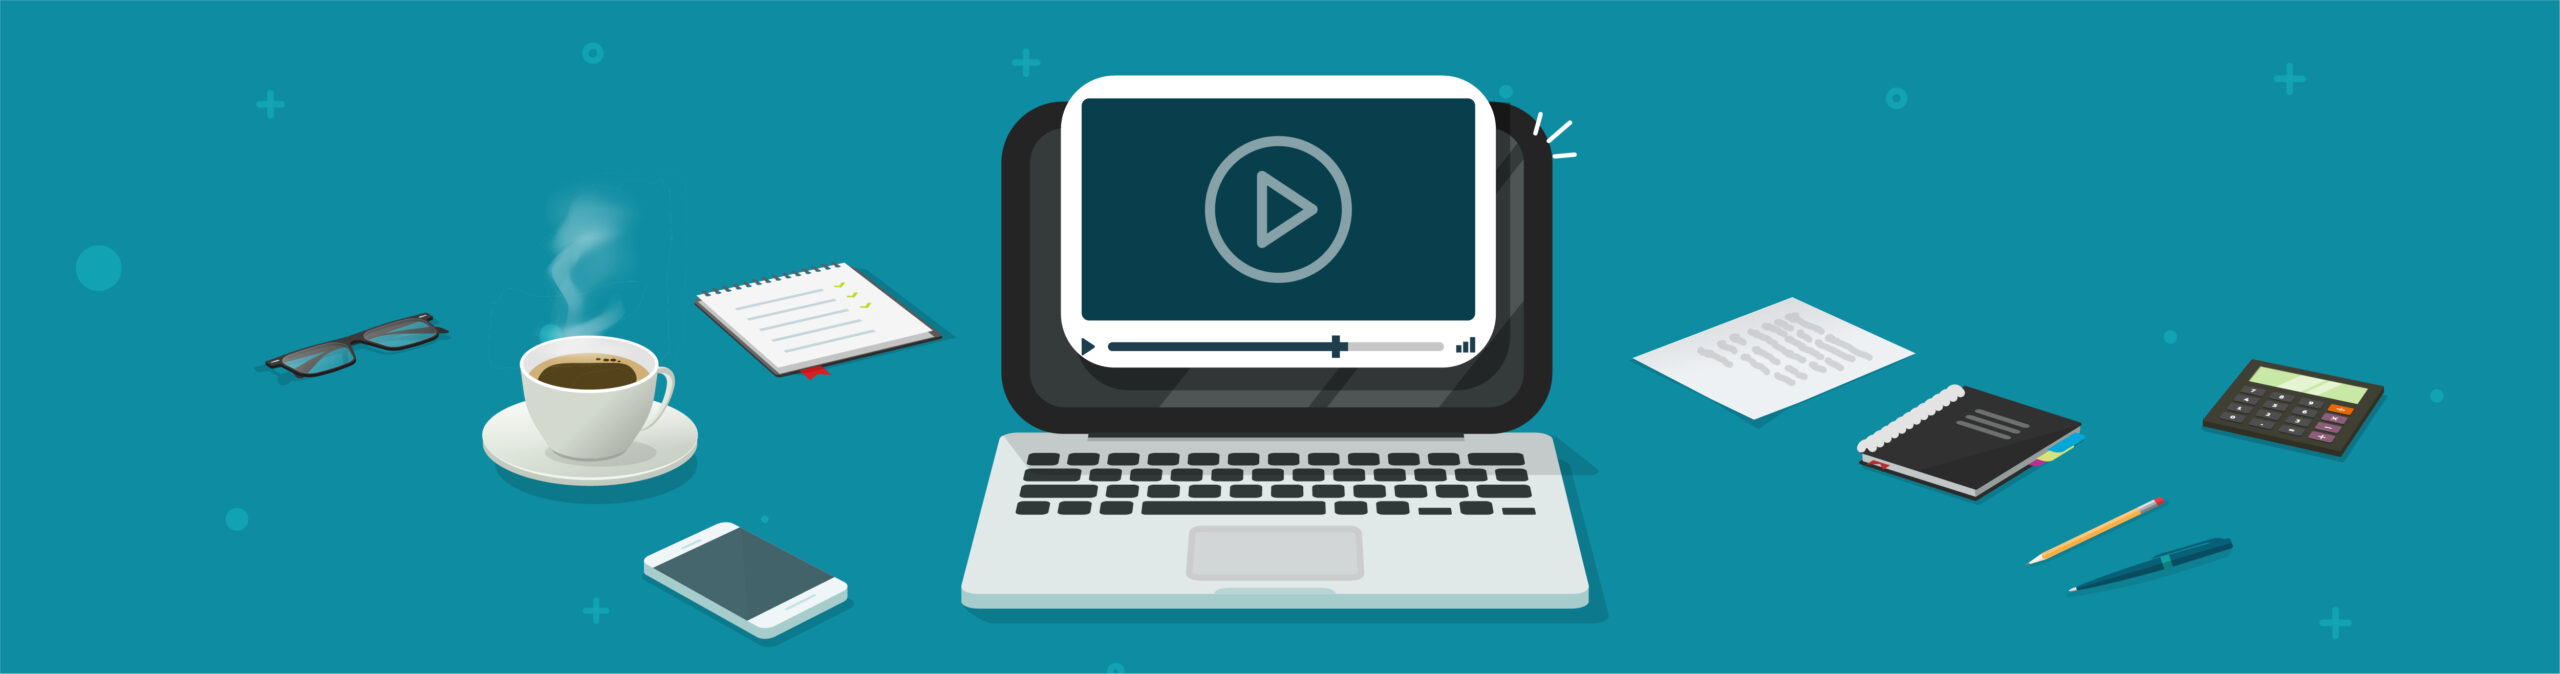 e-Marketing videos production & online presence